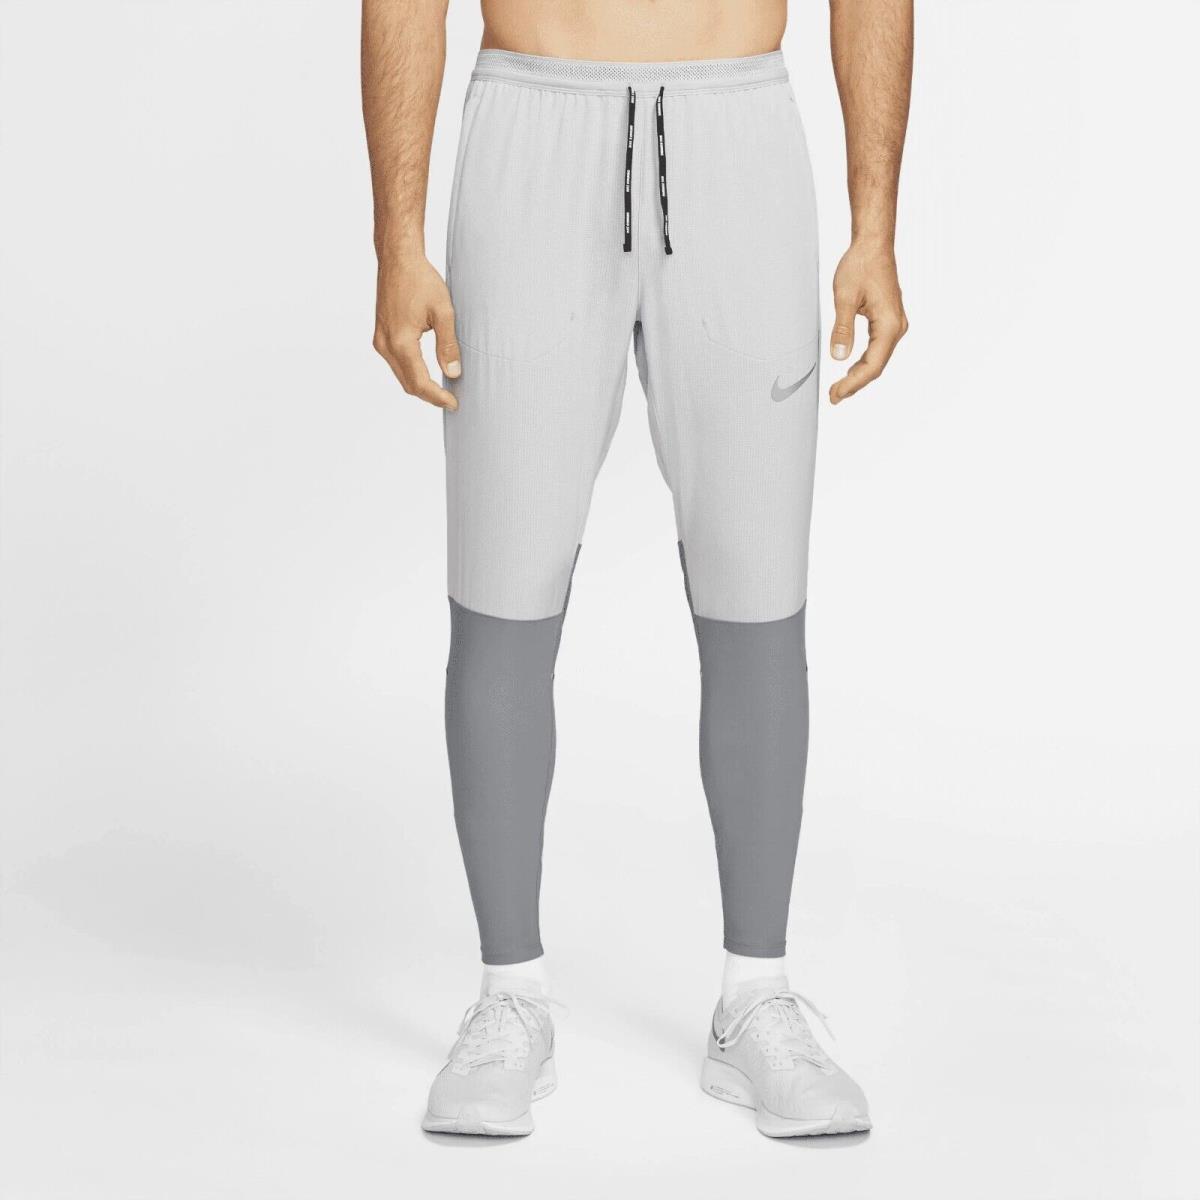 Nike Flex Swift Running Pants Joggers Light Gray Reflective Slim Fit Large